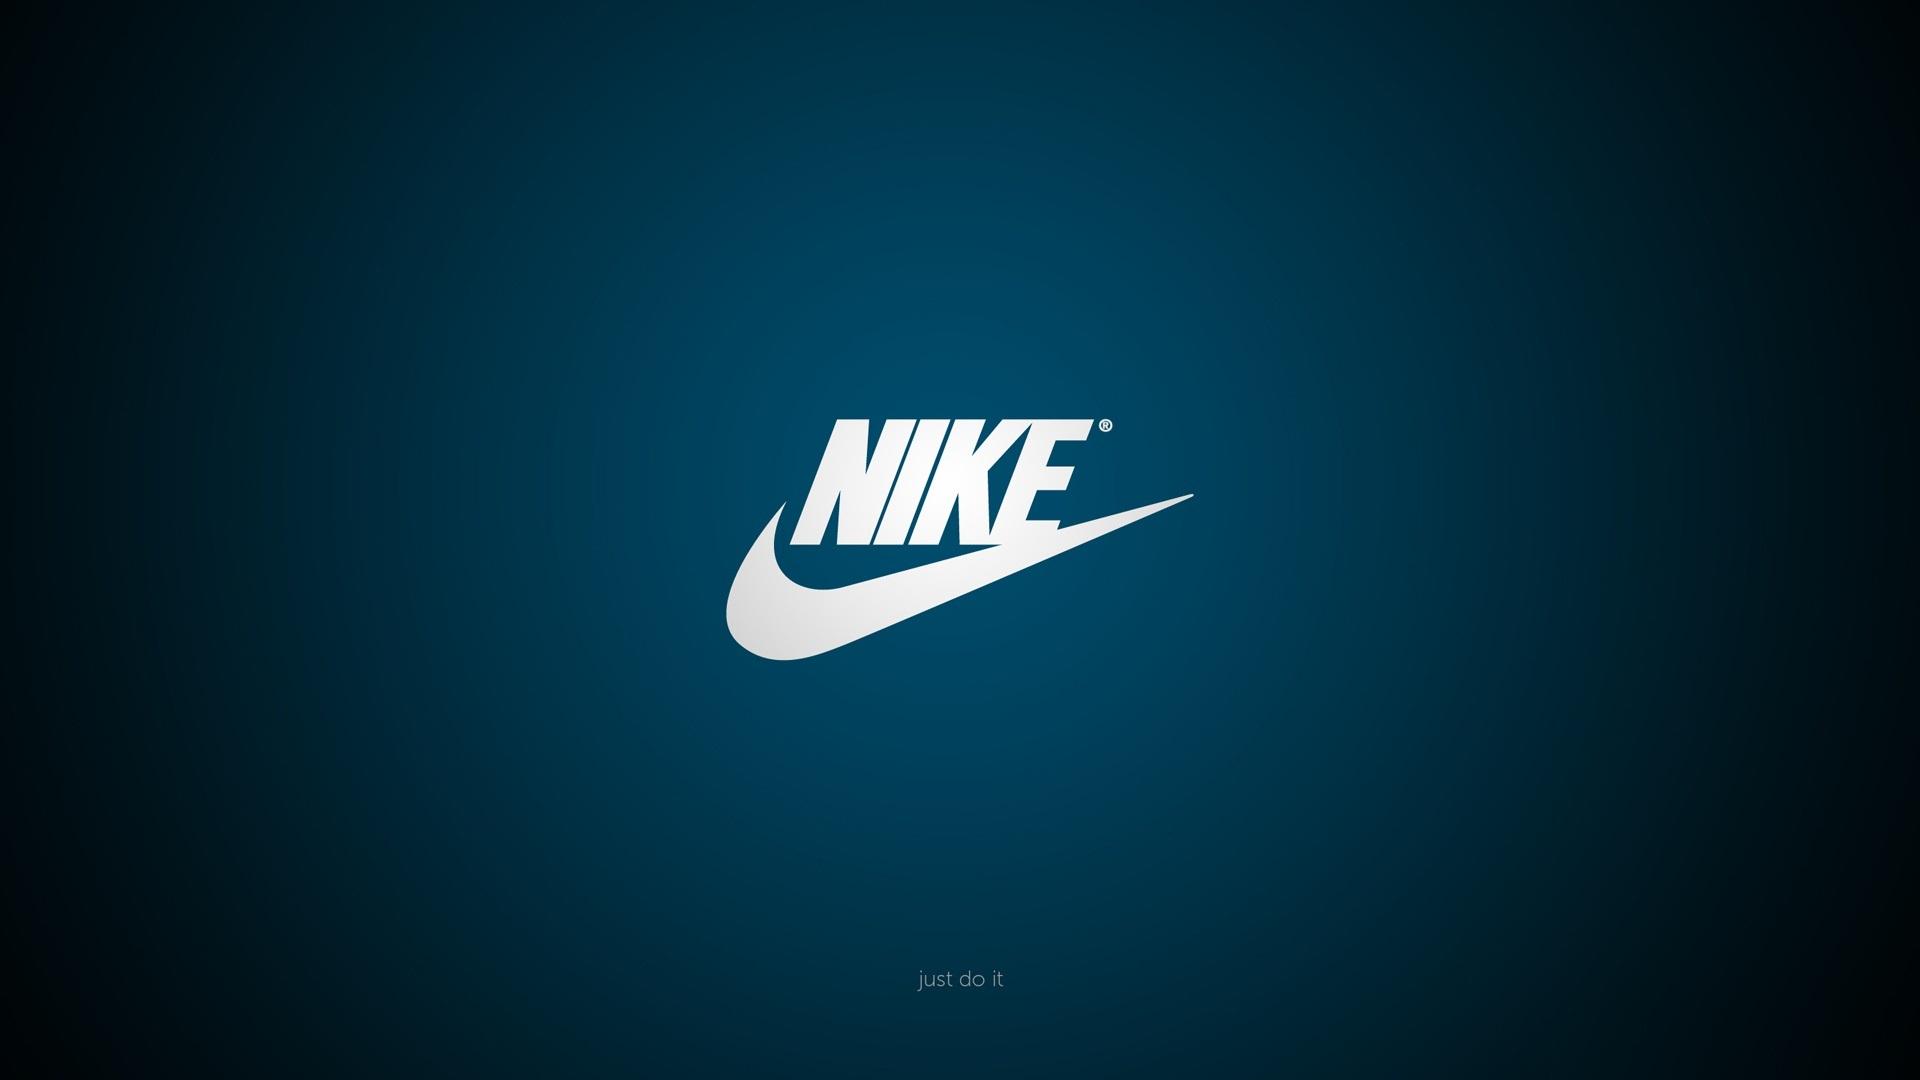 Nikes Wallpaper